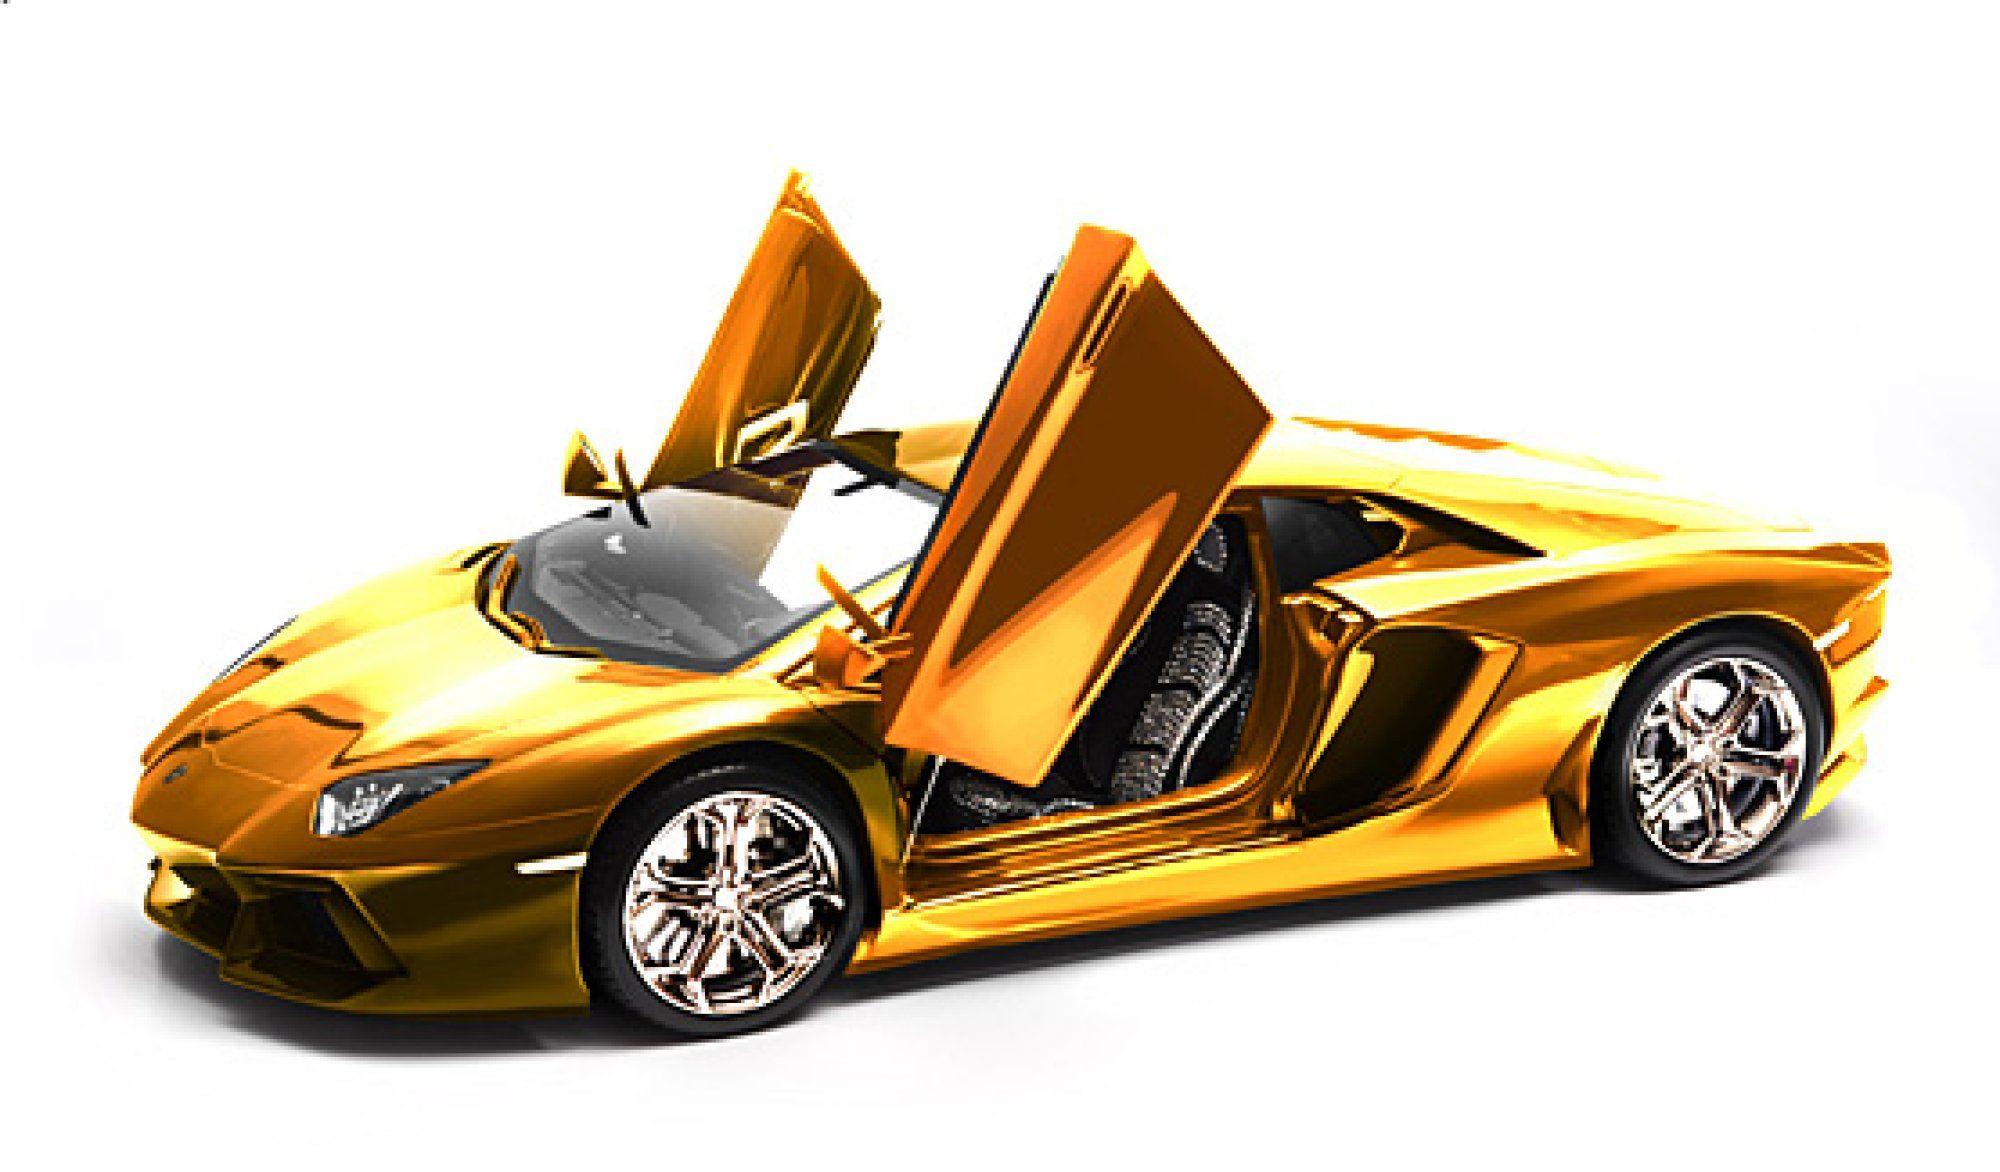 This Model Car Has A $7.5 Million Price Tag. Lamborghini models